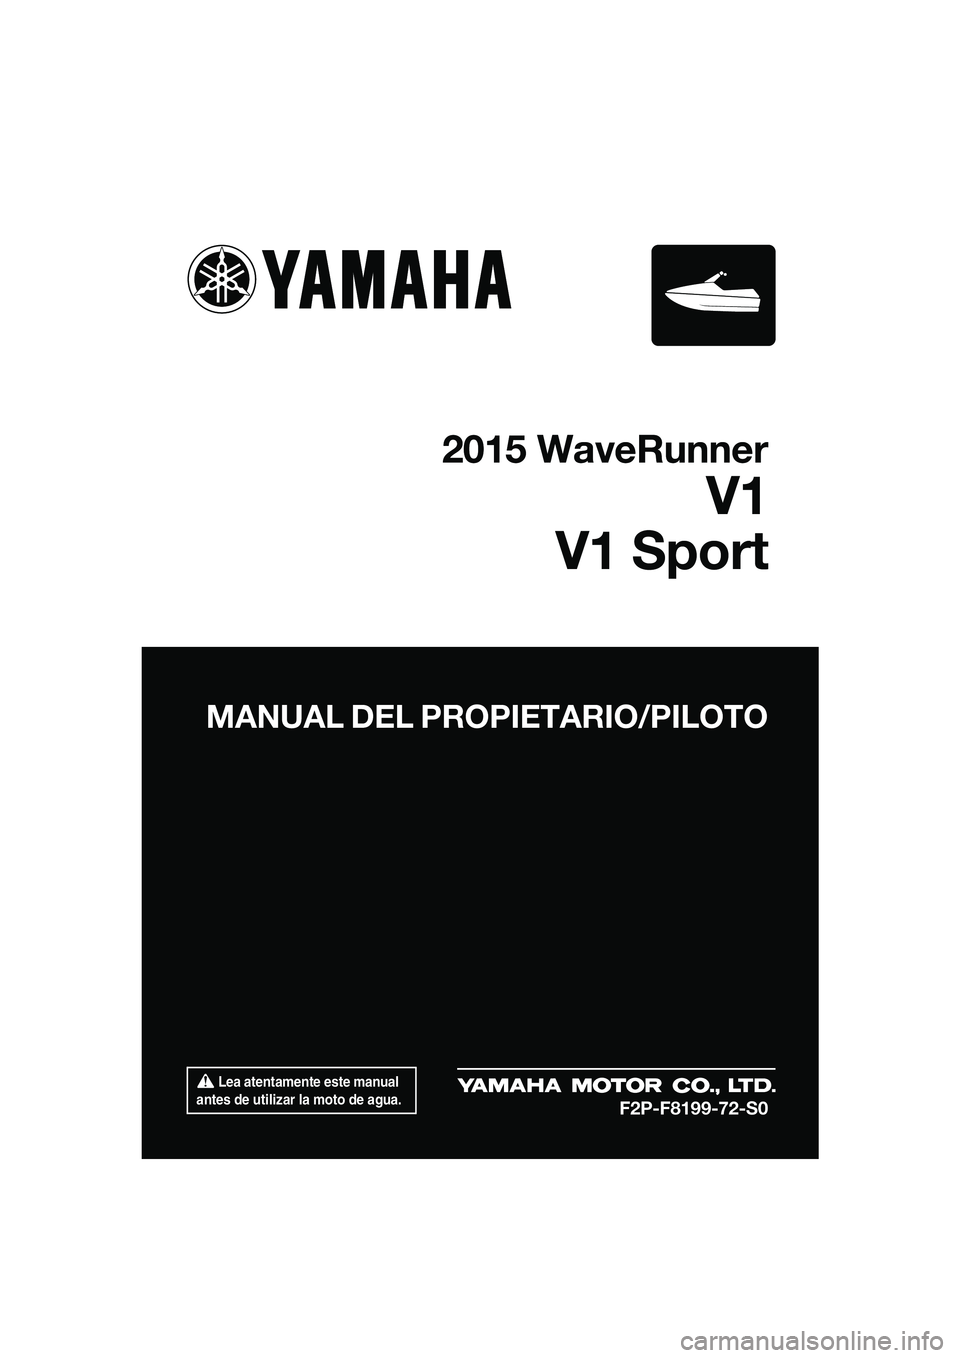 YAMAHA V1 2015  Manuale de Empleo (in Spanish) 